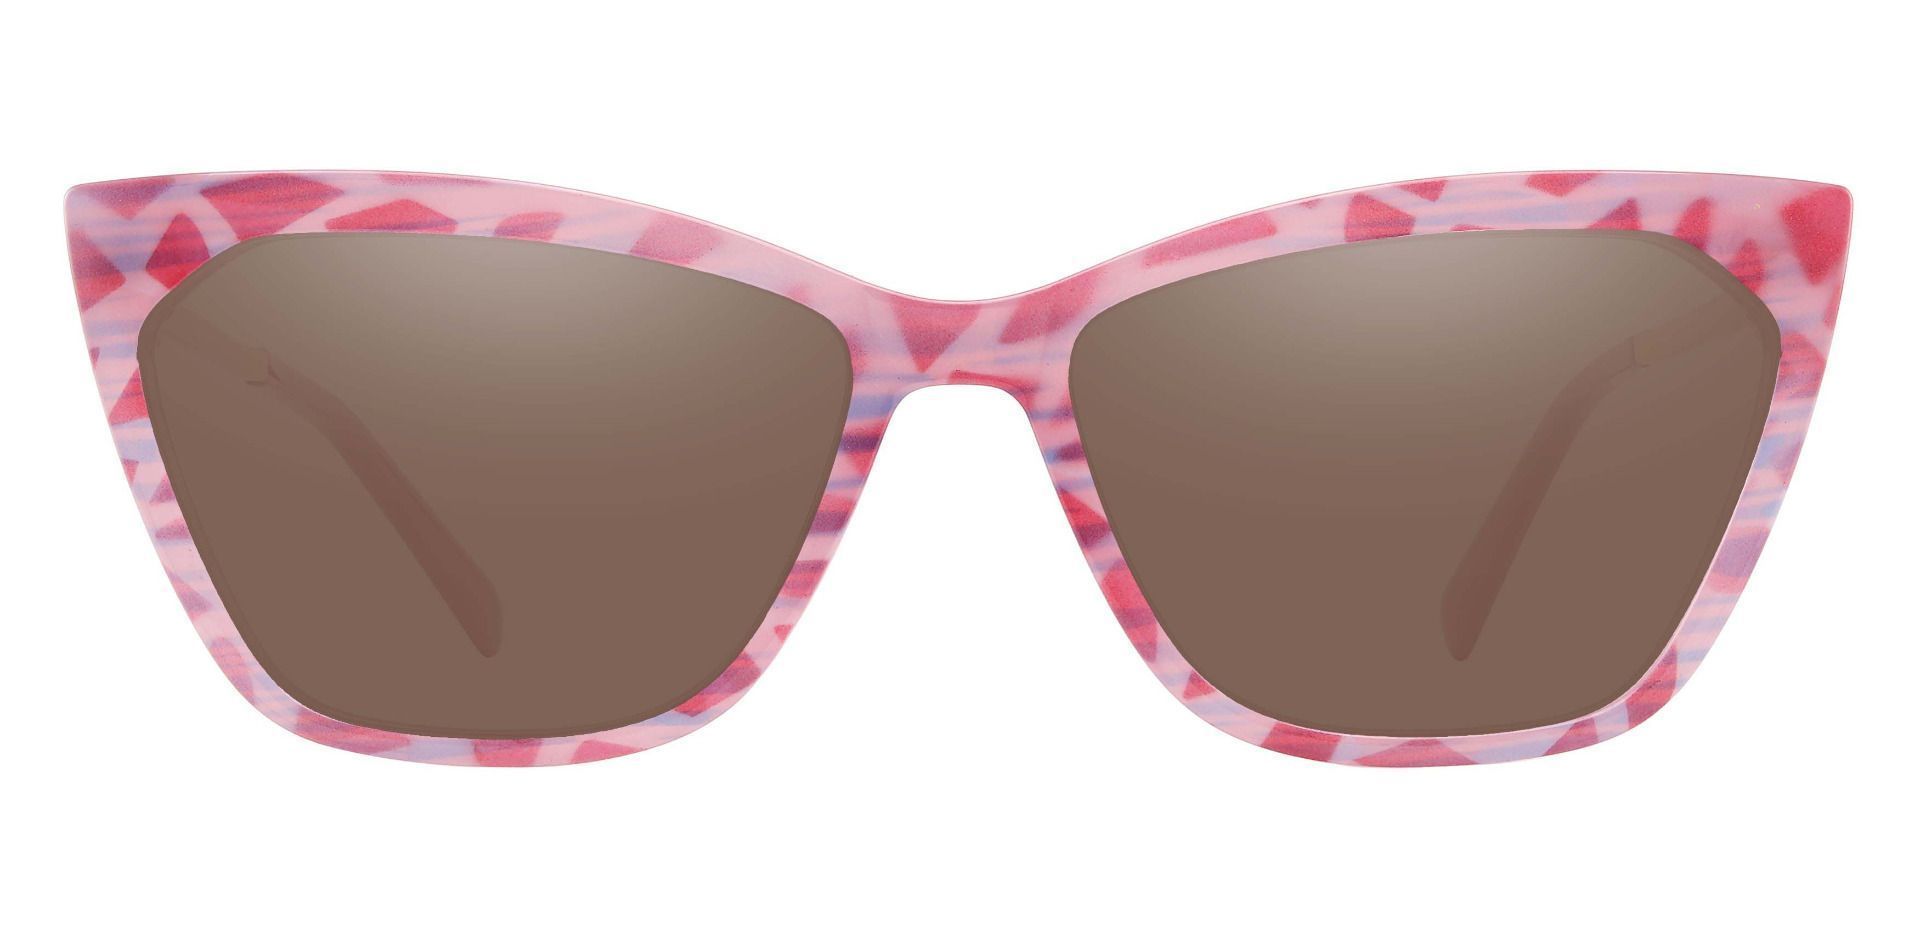 Addison Cat Eye Prescription Sunglasses - Pink Frame With Brown Lenses